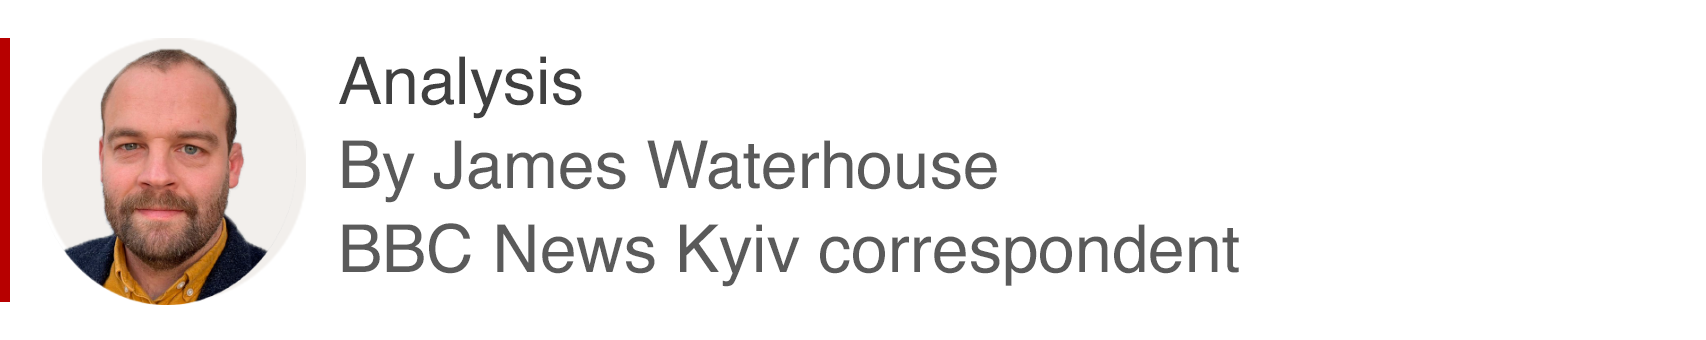 Analysis box by James Waterhouse, BBC News Kyiv correspondent